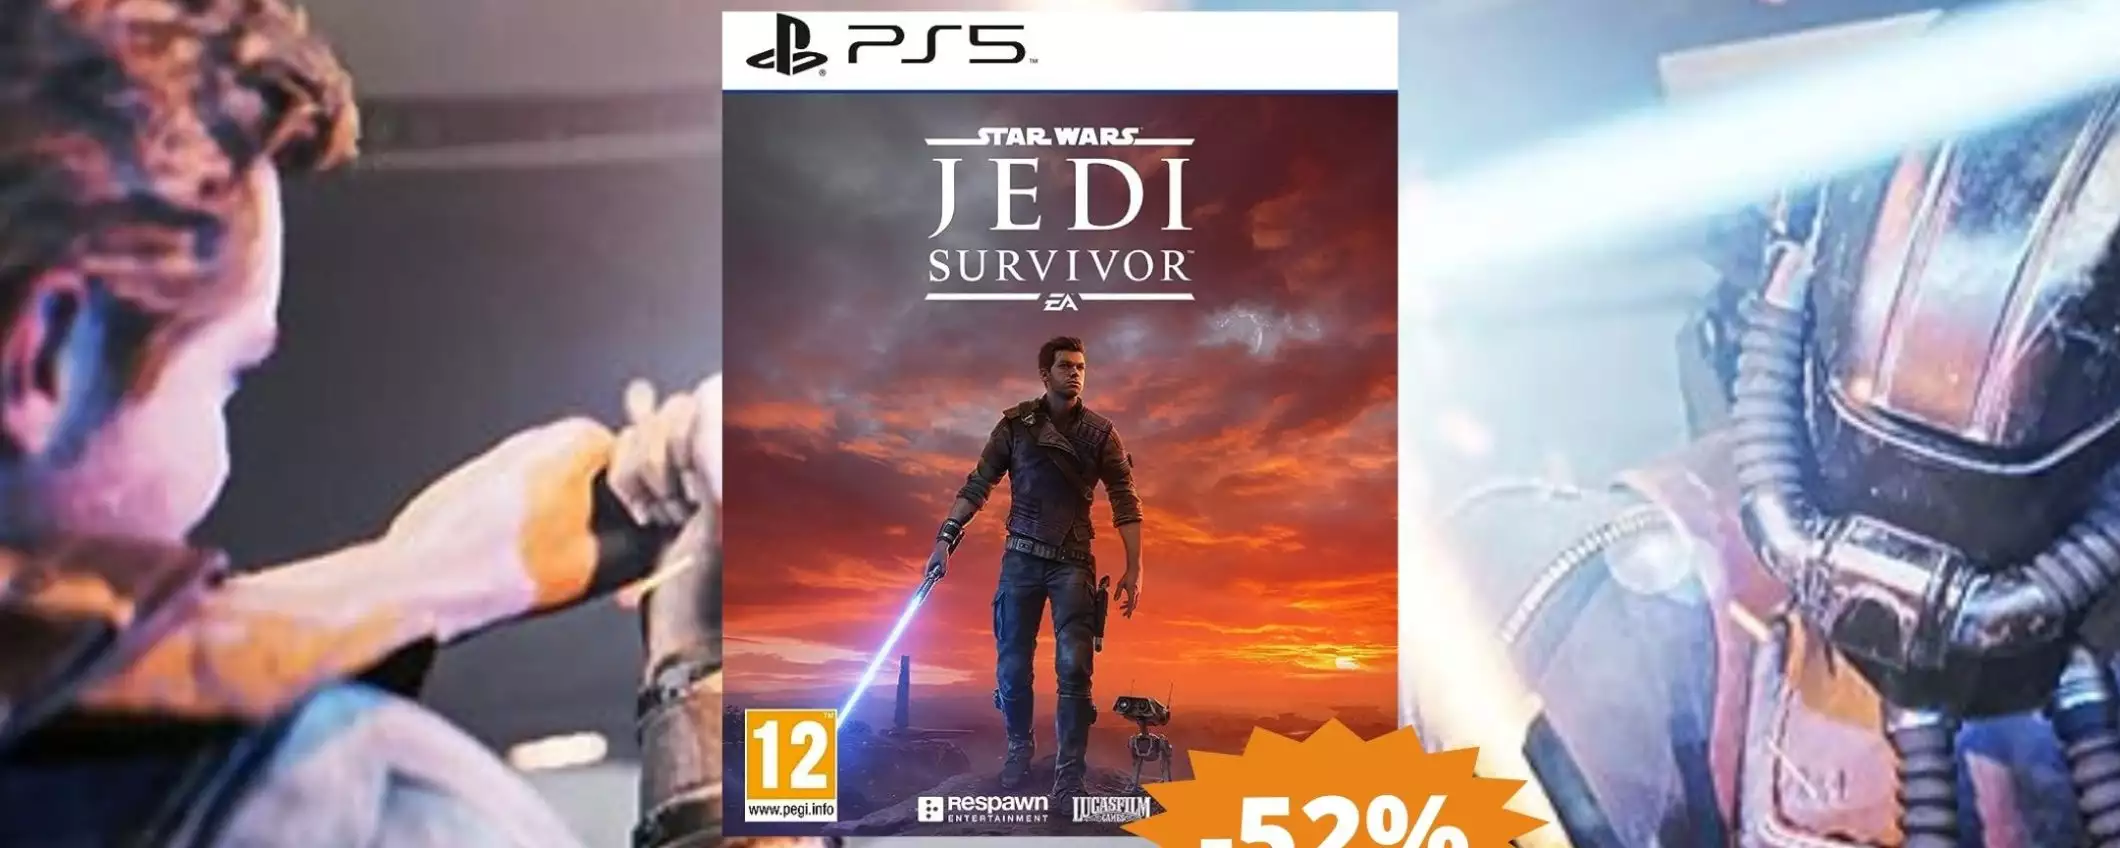 Star Wars Jedi Survivor: un'AVVENTURA galattica (-52%)